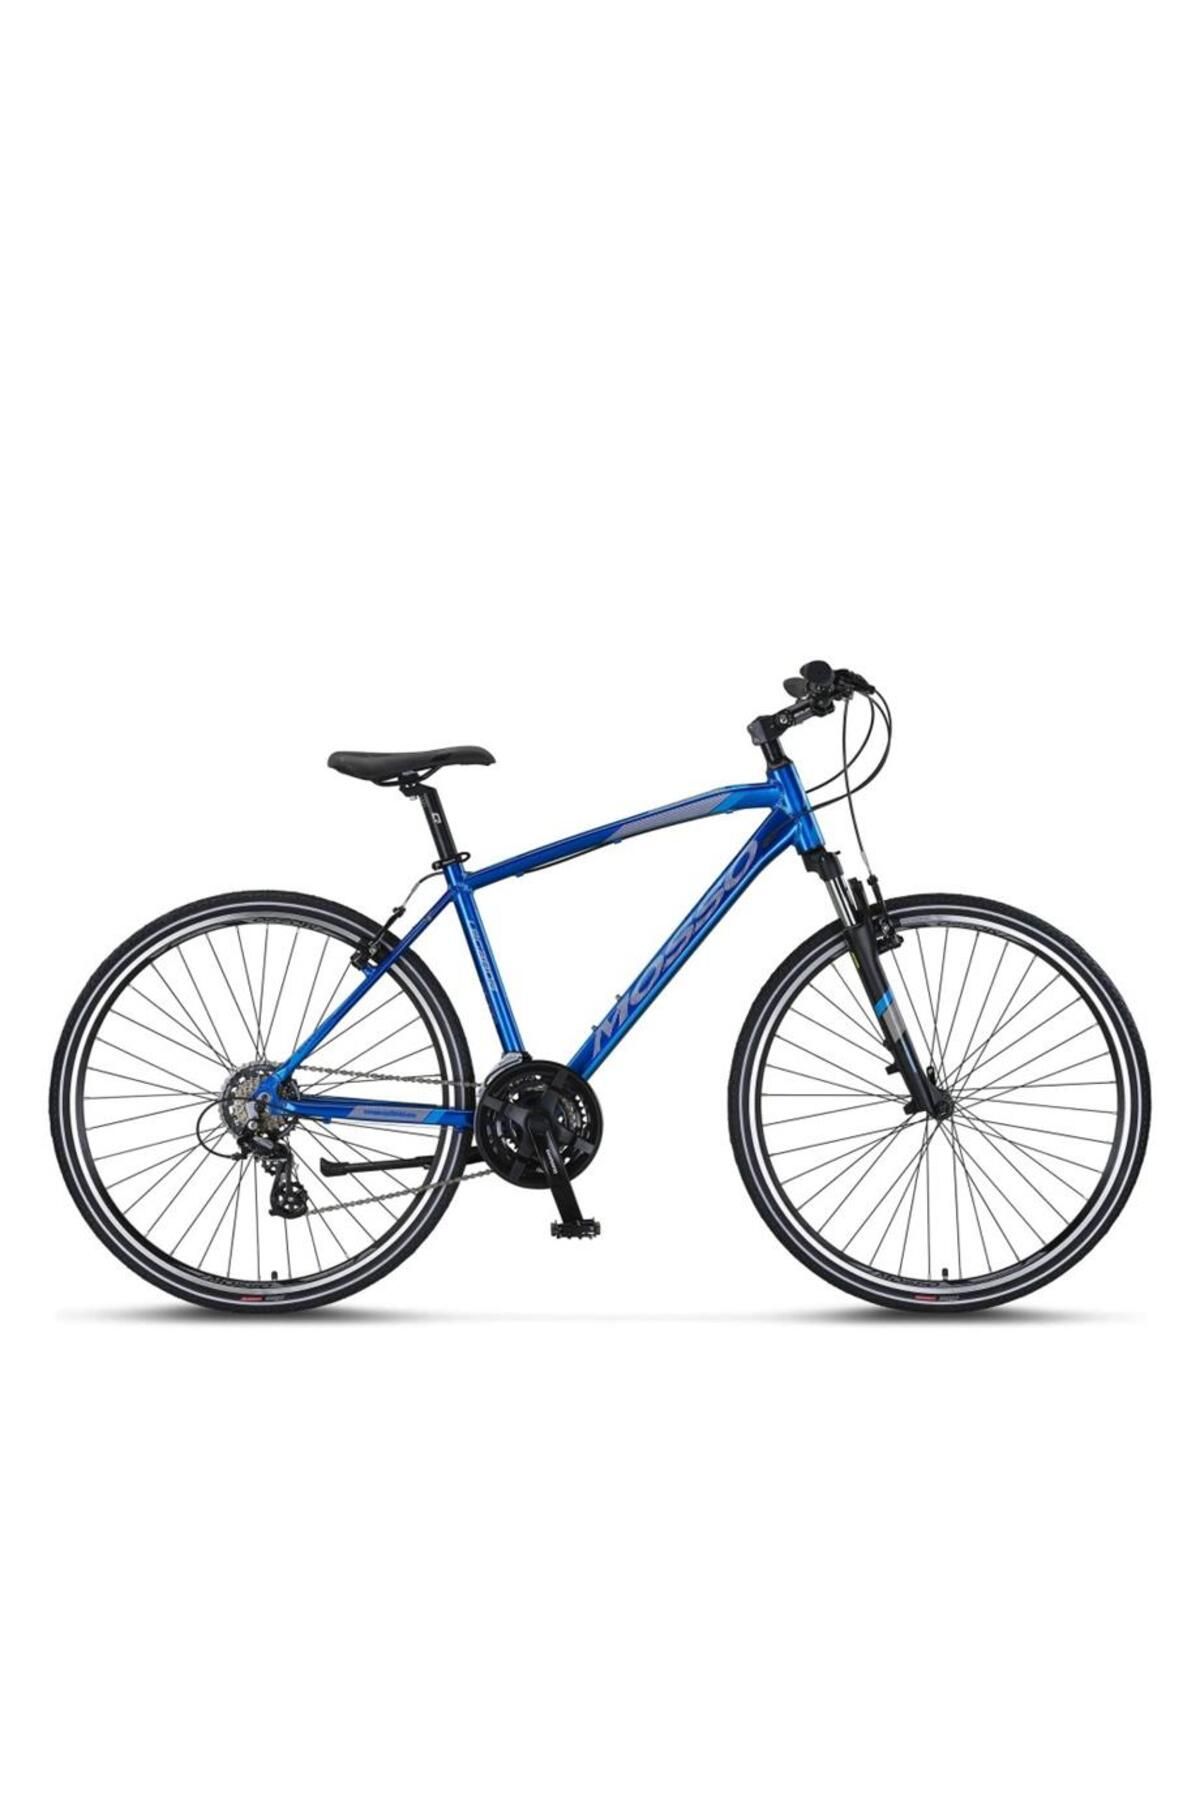 Mosso Legarda-2221-msm-v Erkek Şehir Bisikleti 460h 28 Jant 21 Vites Lacivert Mavi